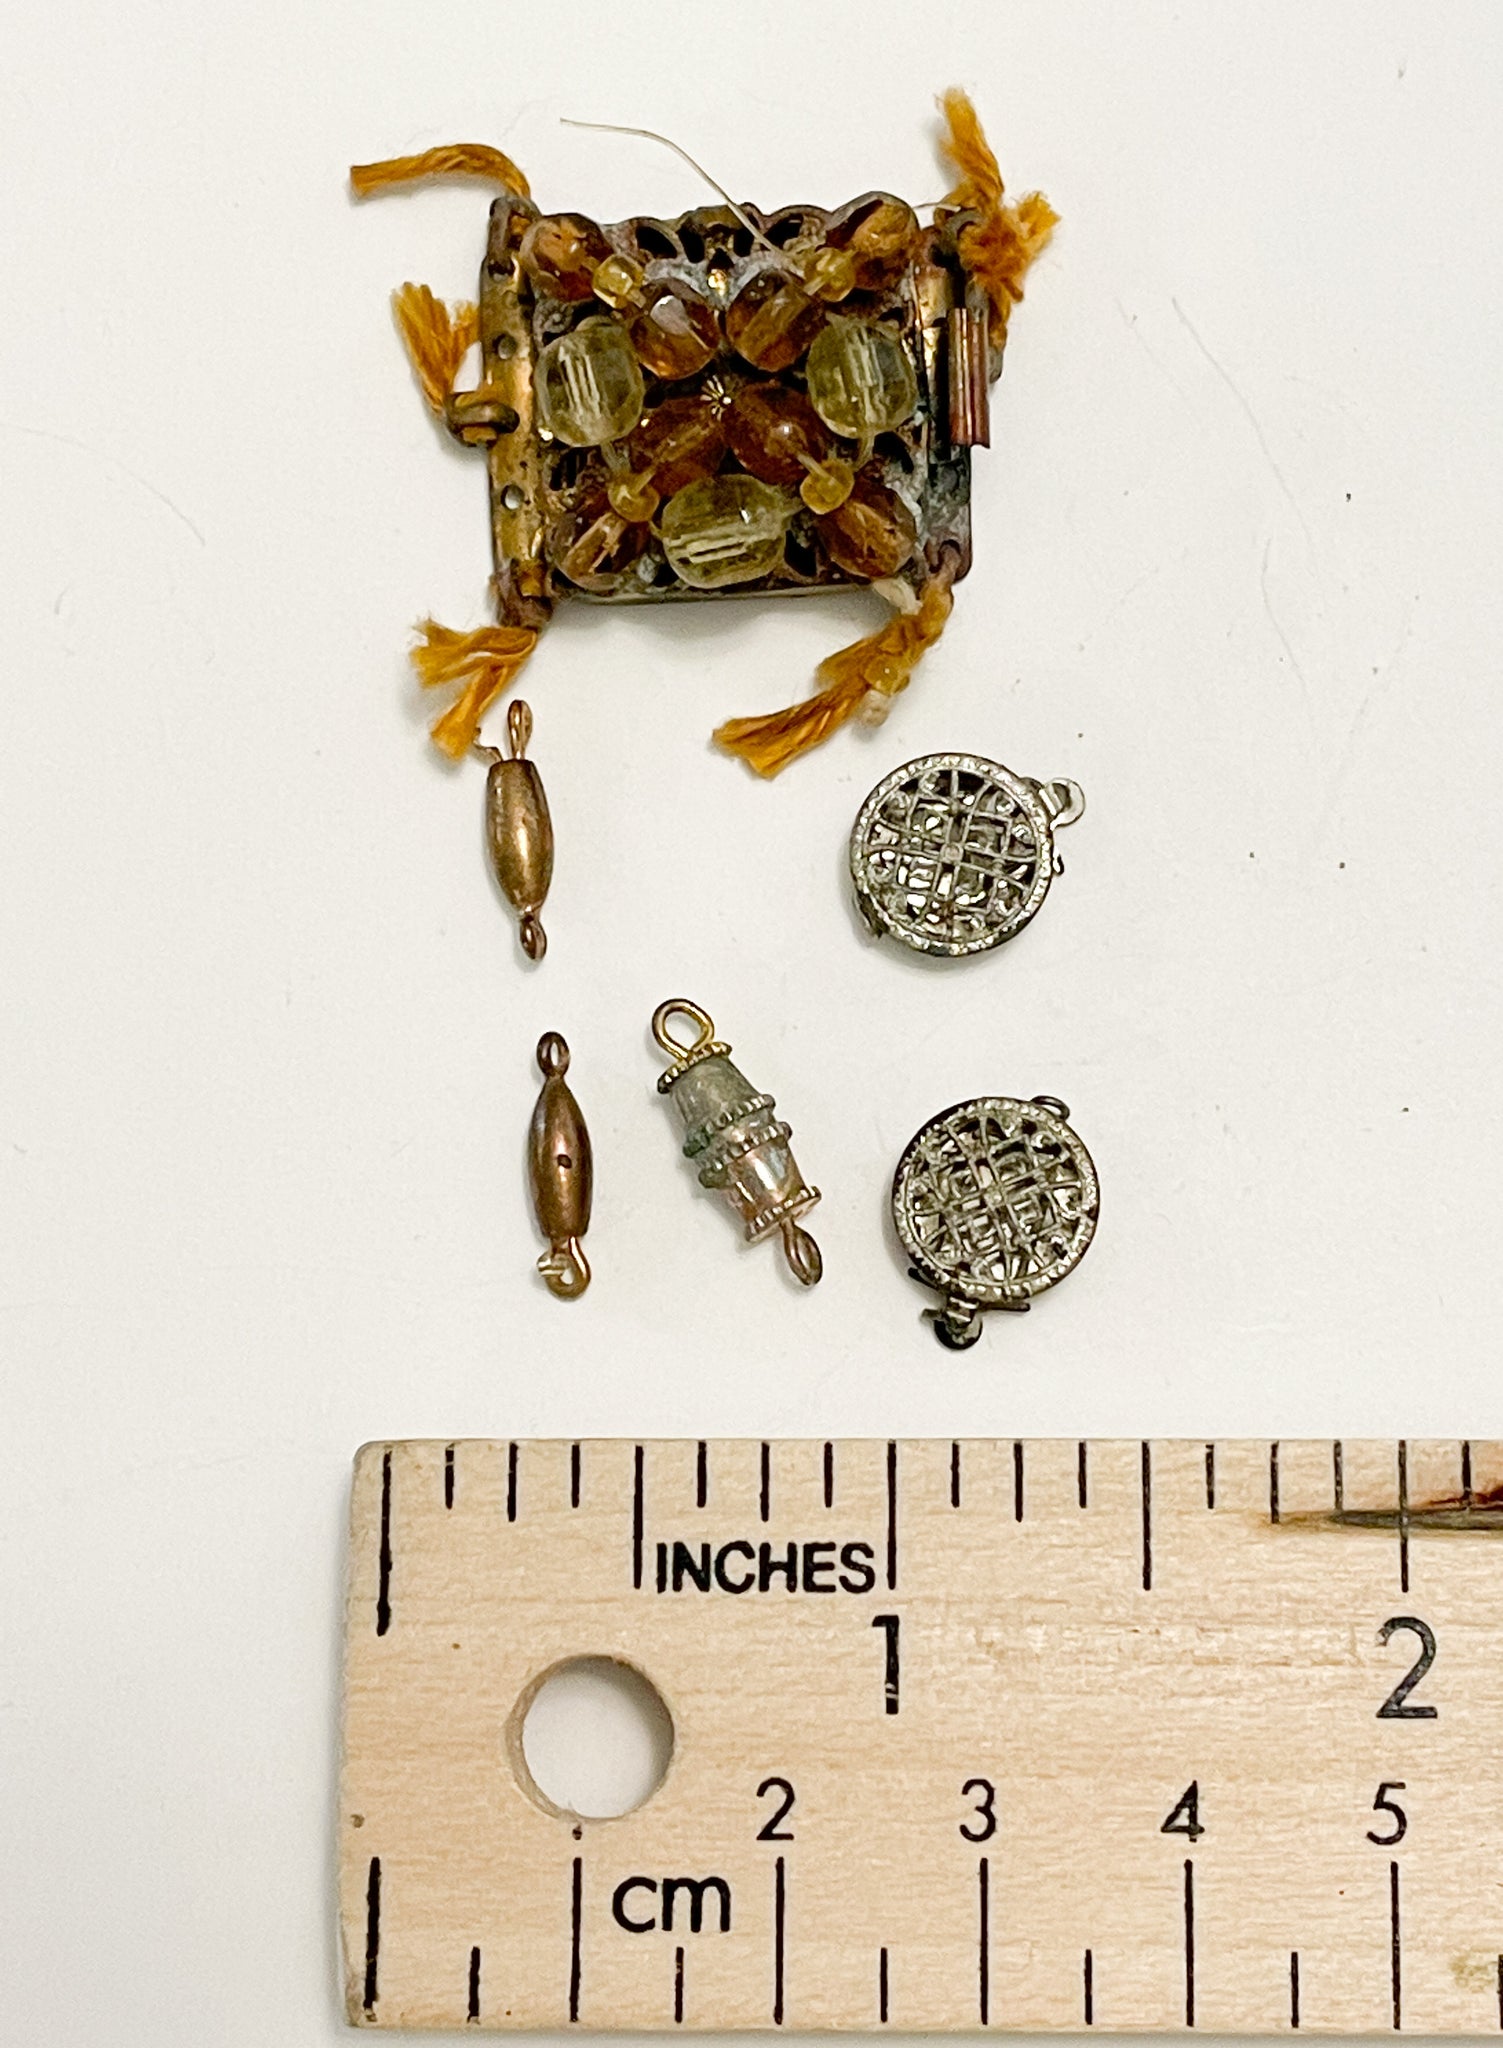 SALE Vintage Jewelry Clasps - Bundle of 6